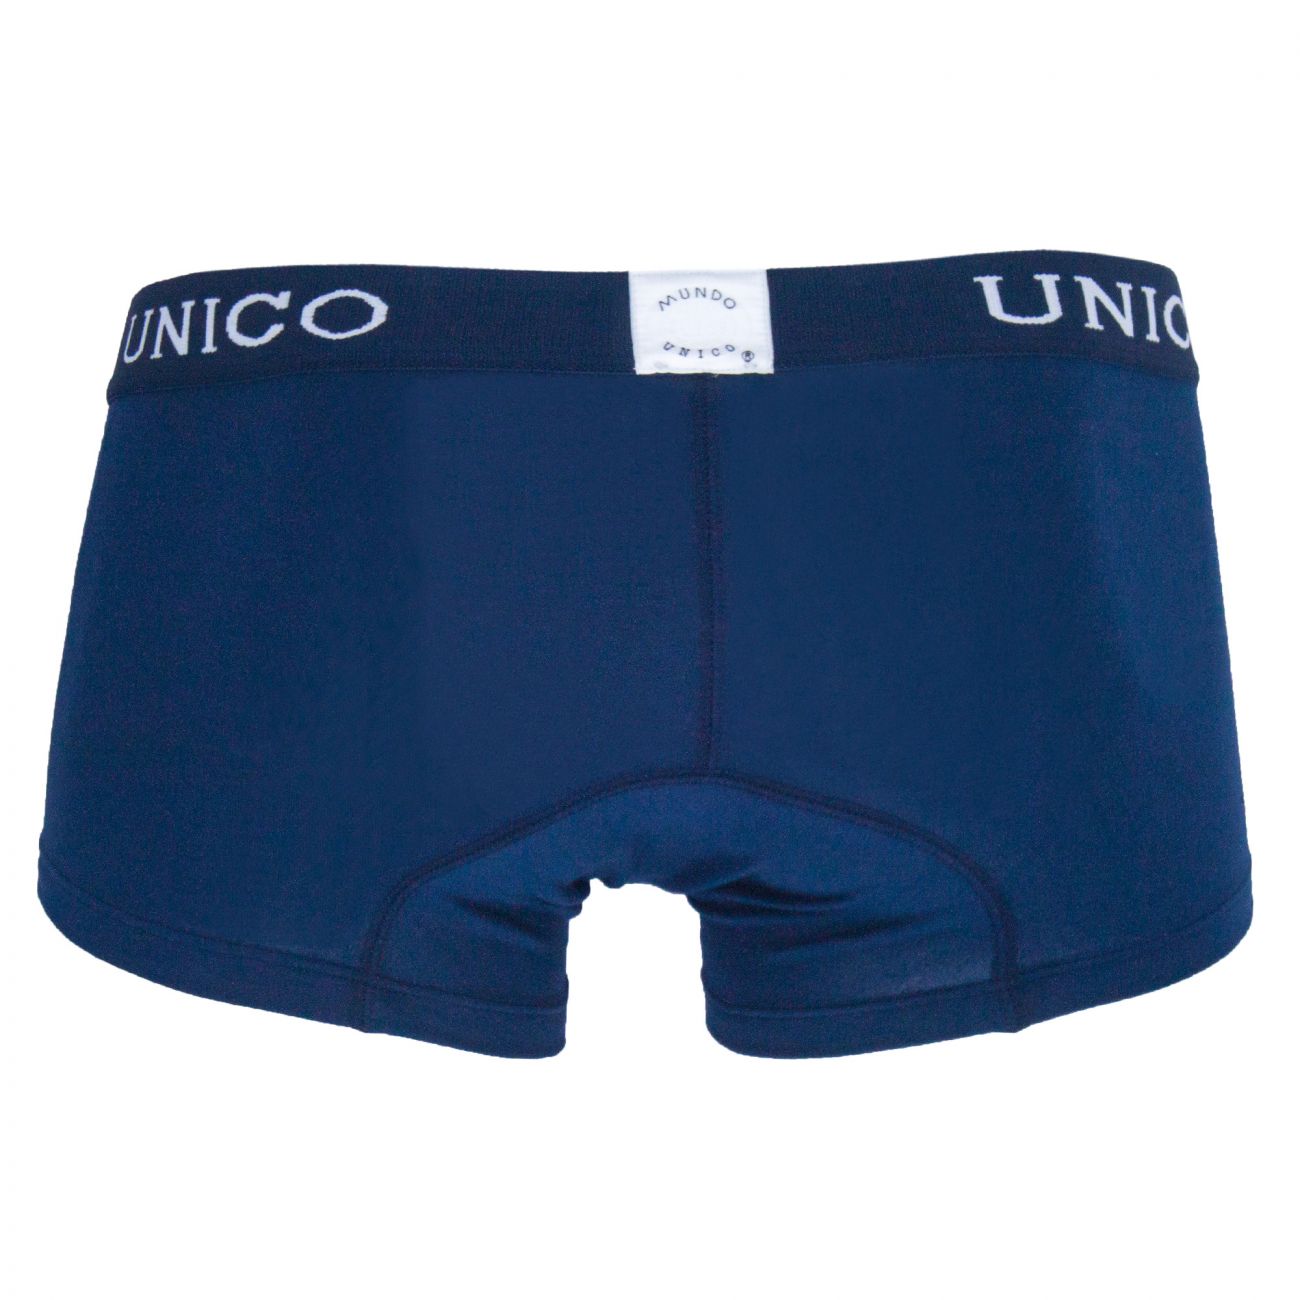 Mens Underwear: Unico 9610080182 Boxer Briefs Profundo | eBay